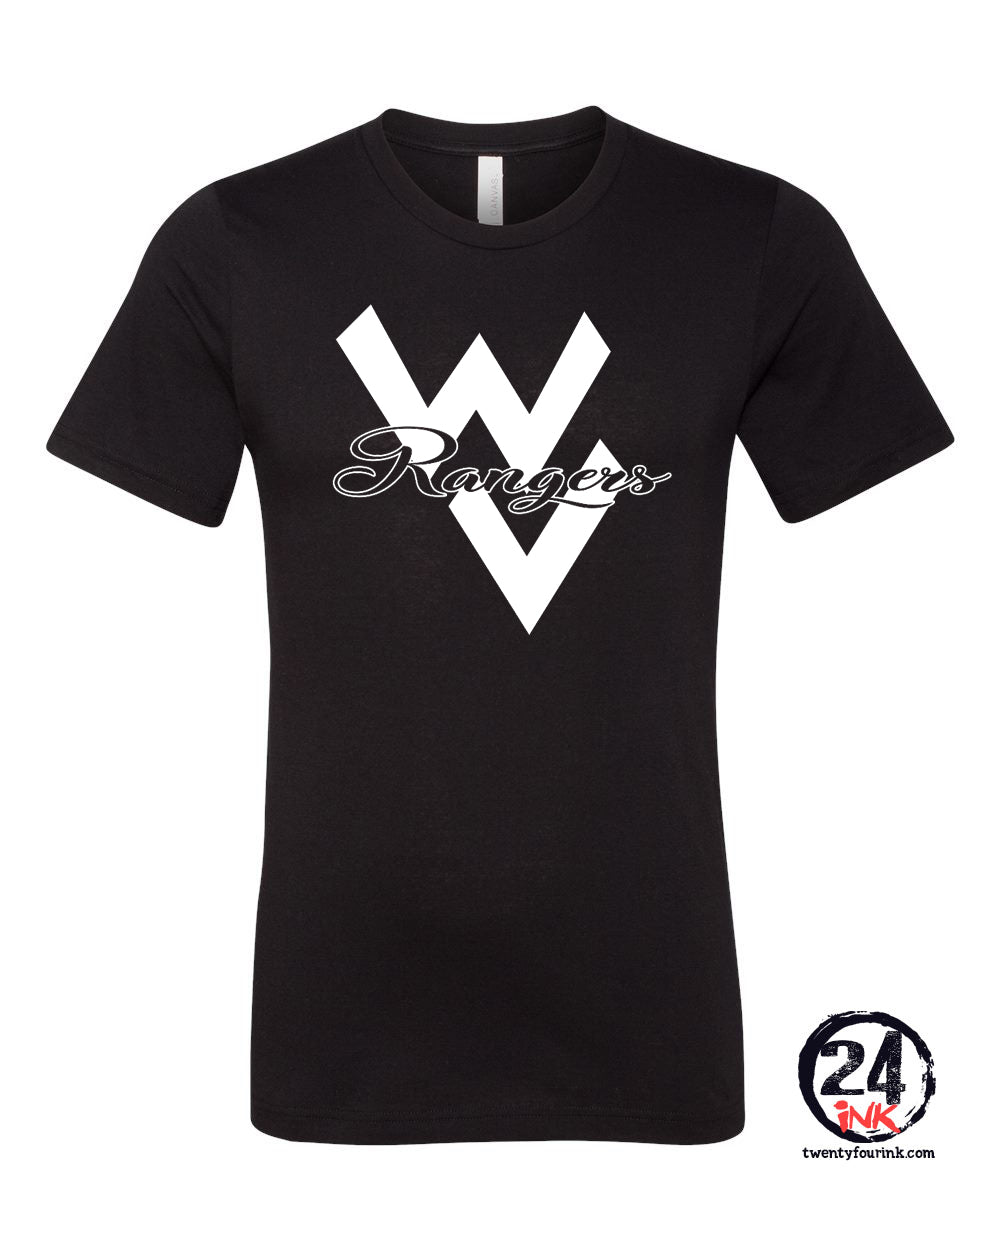 Wallkill Cheer design 1 T-Shirt